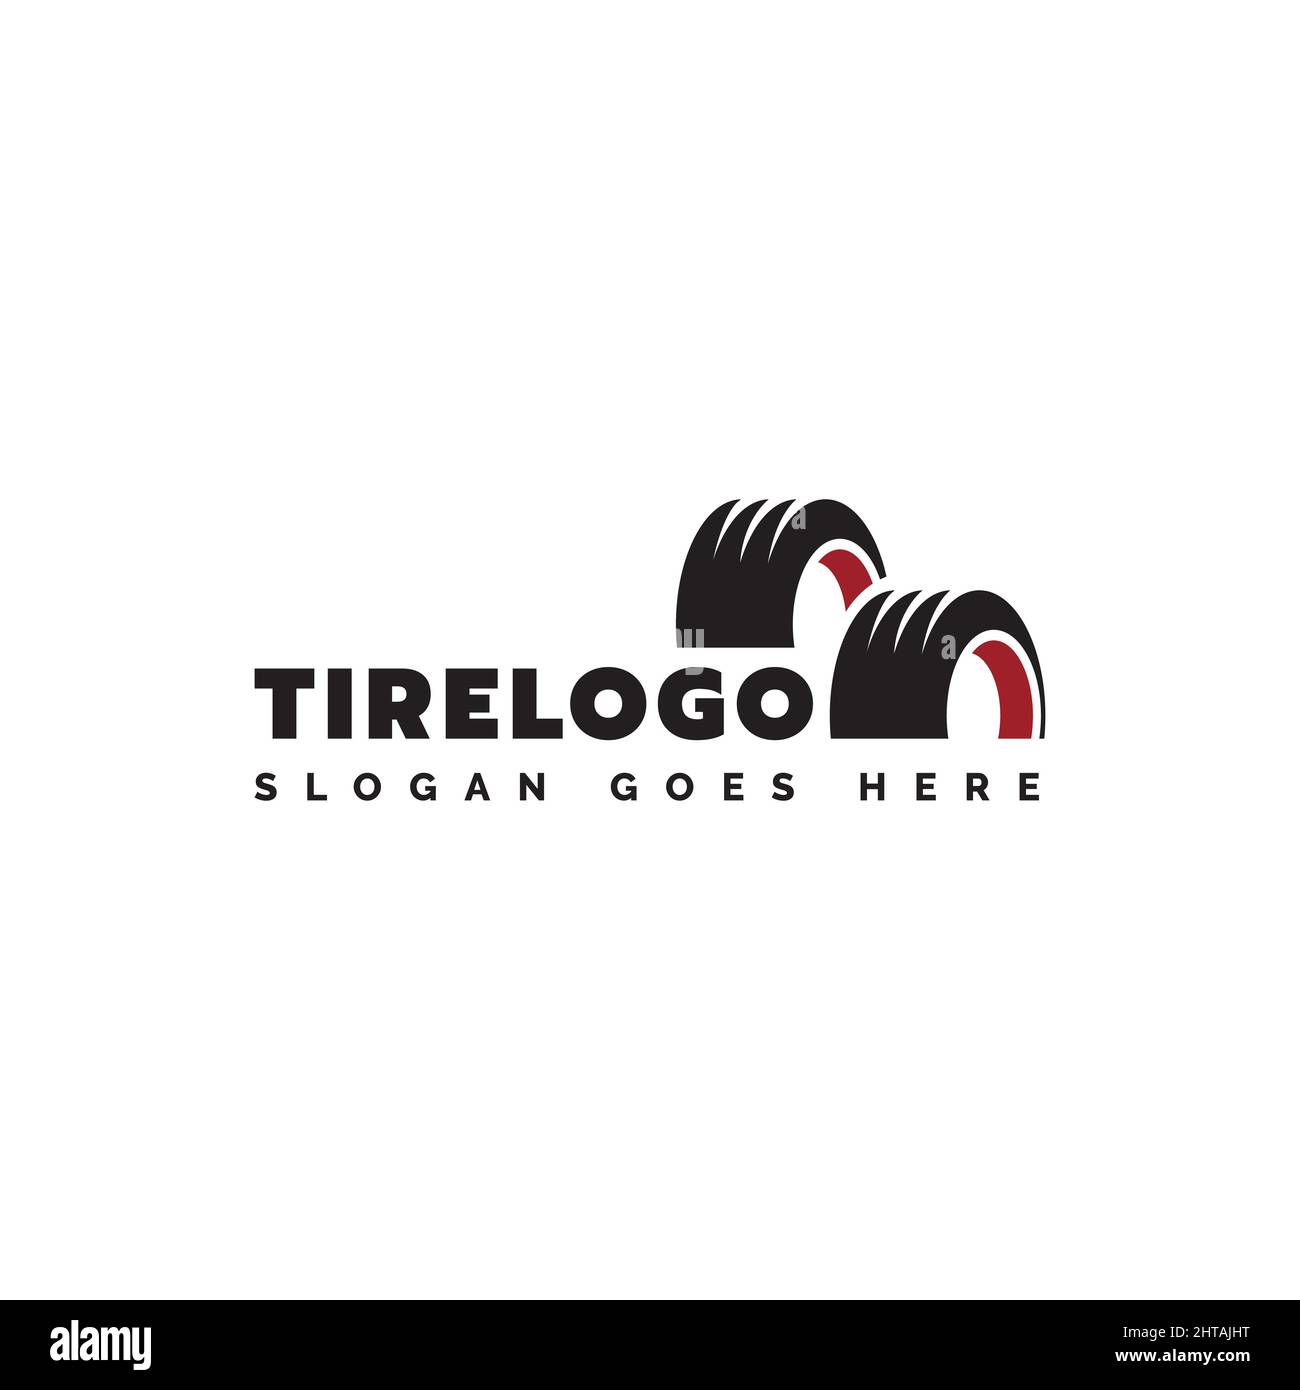 Tire logo design illustration vector template Stock Vector